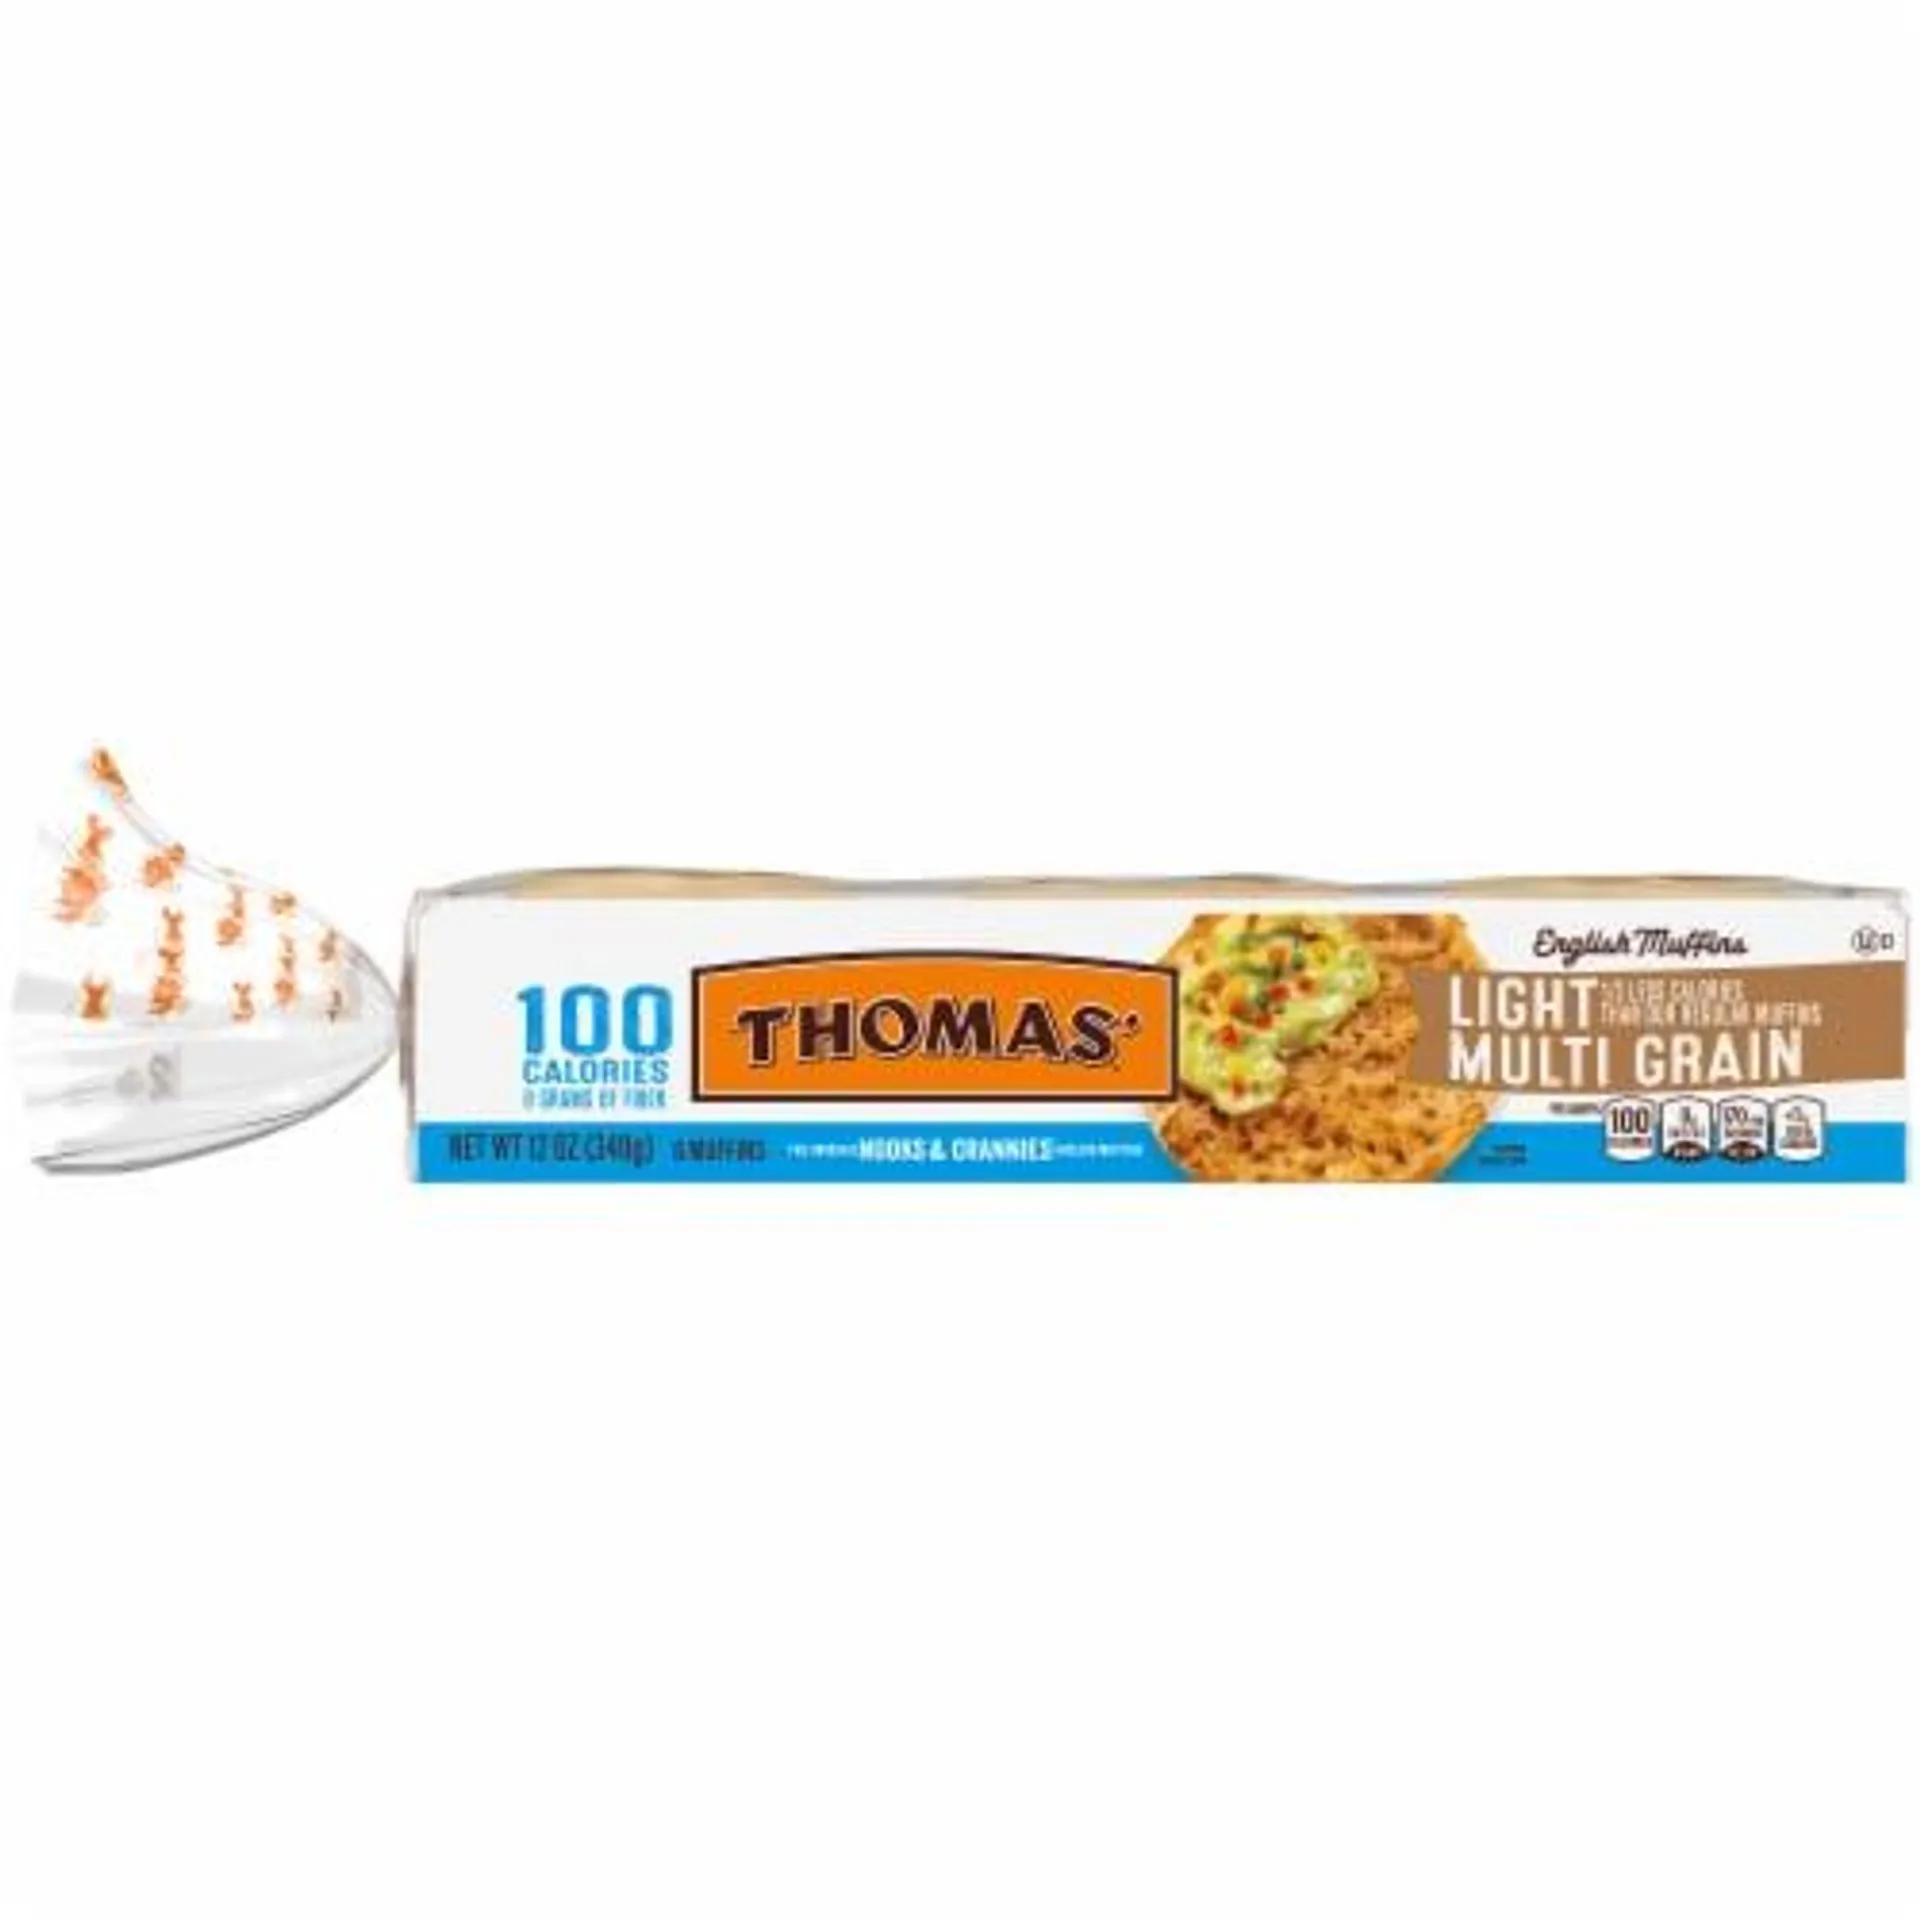 Thomas' Nooks & Crannies Light Multi-Grain English Muffins